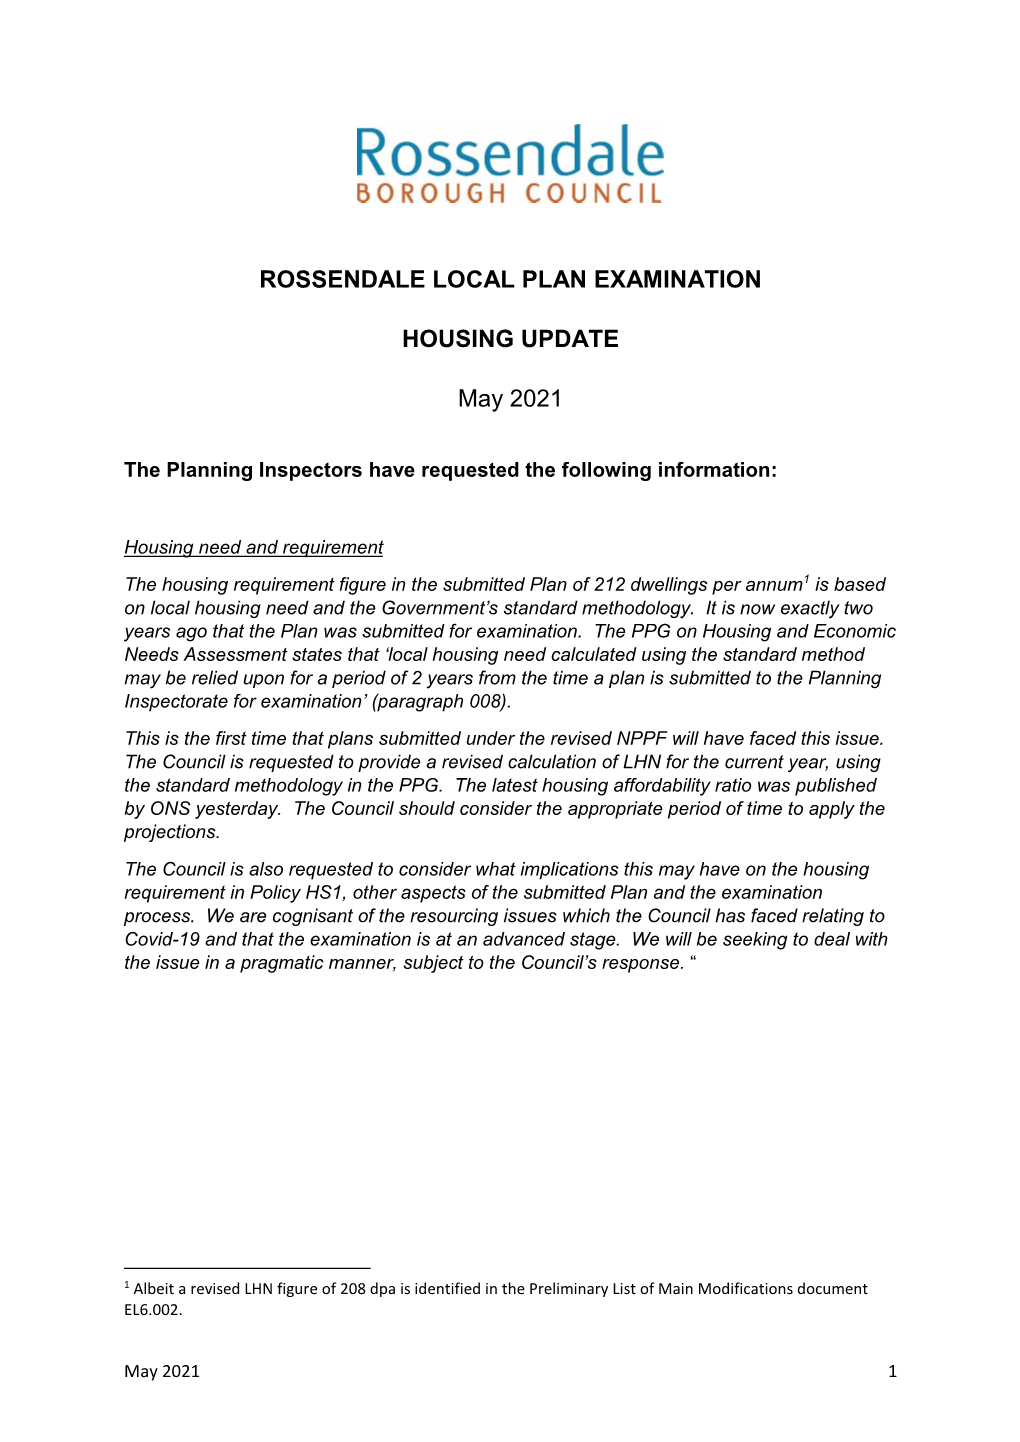 Rossendale Local Plan Examination Housing Update